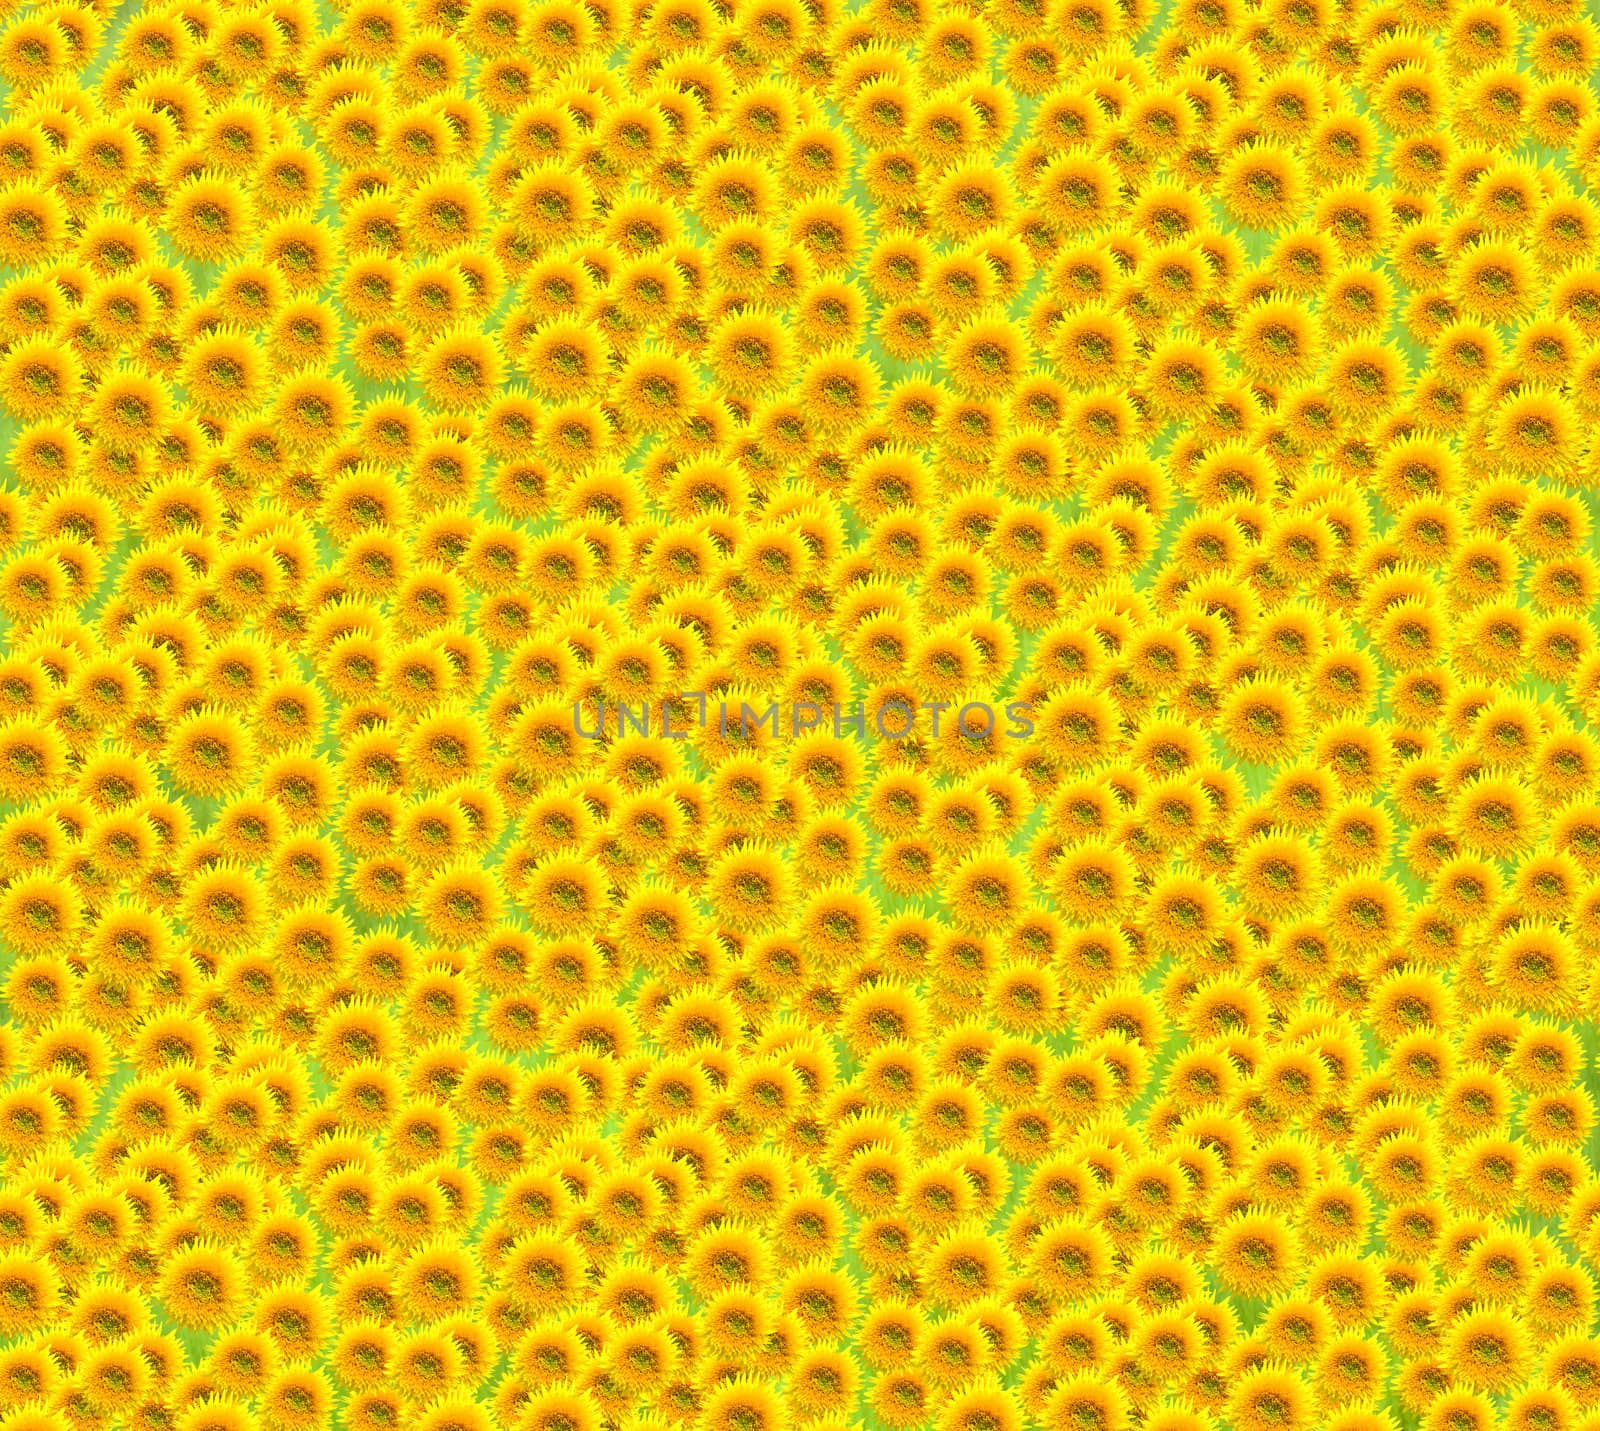 Background shot made of beautiful sunflowers.